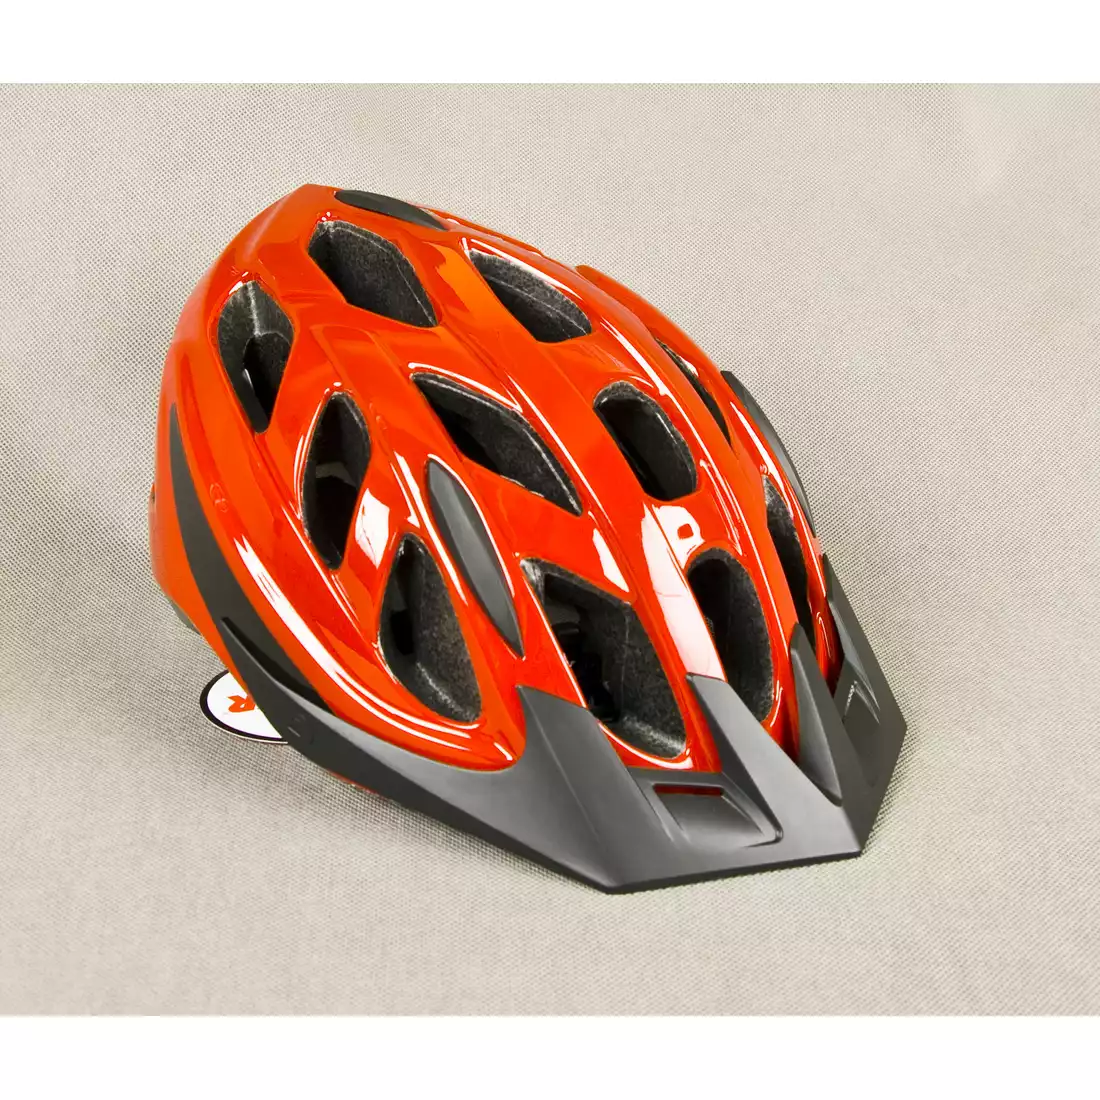 LAZER - CYCLONE kask rowerowy MTB, kolor: red